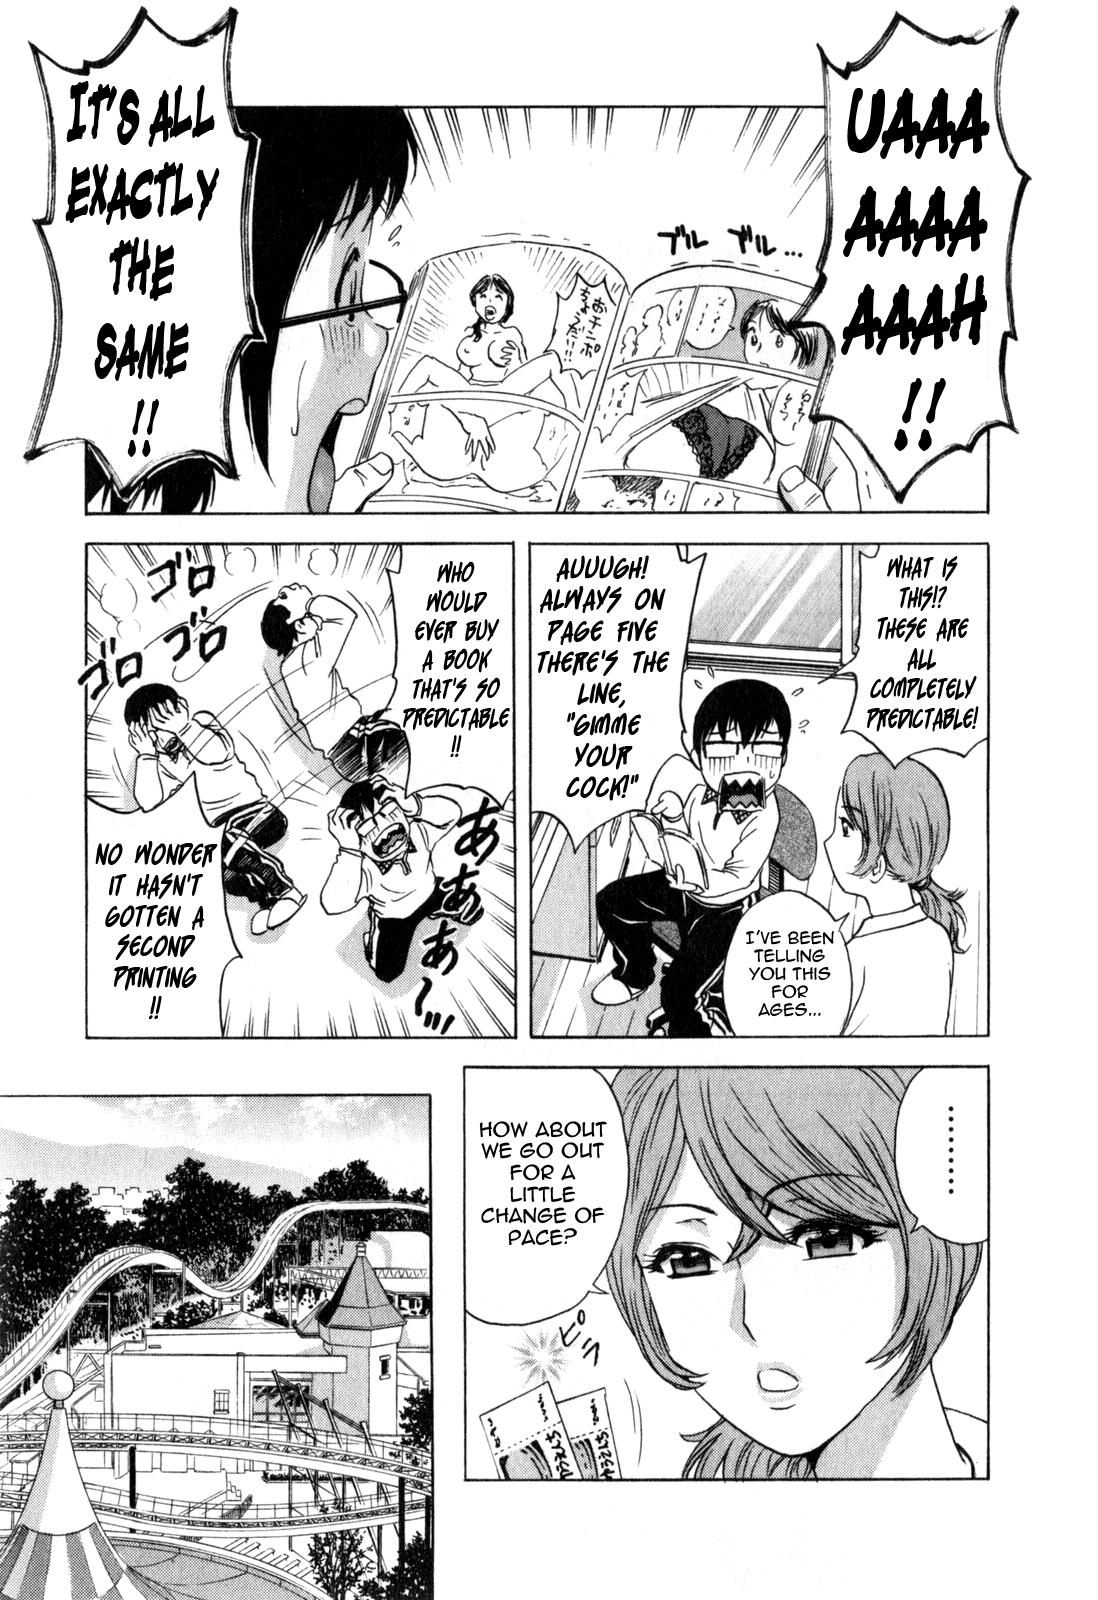 [Hidemaru] Life with Married Women Just Like a Manga 3 - Ch. 1-8 [English] {Tadanohito} 29